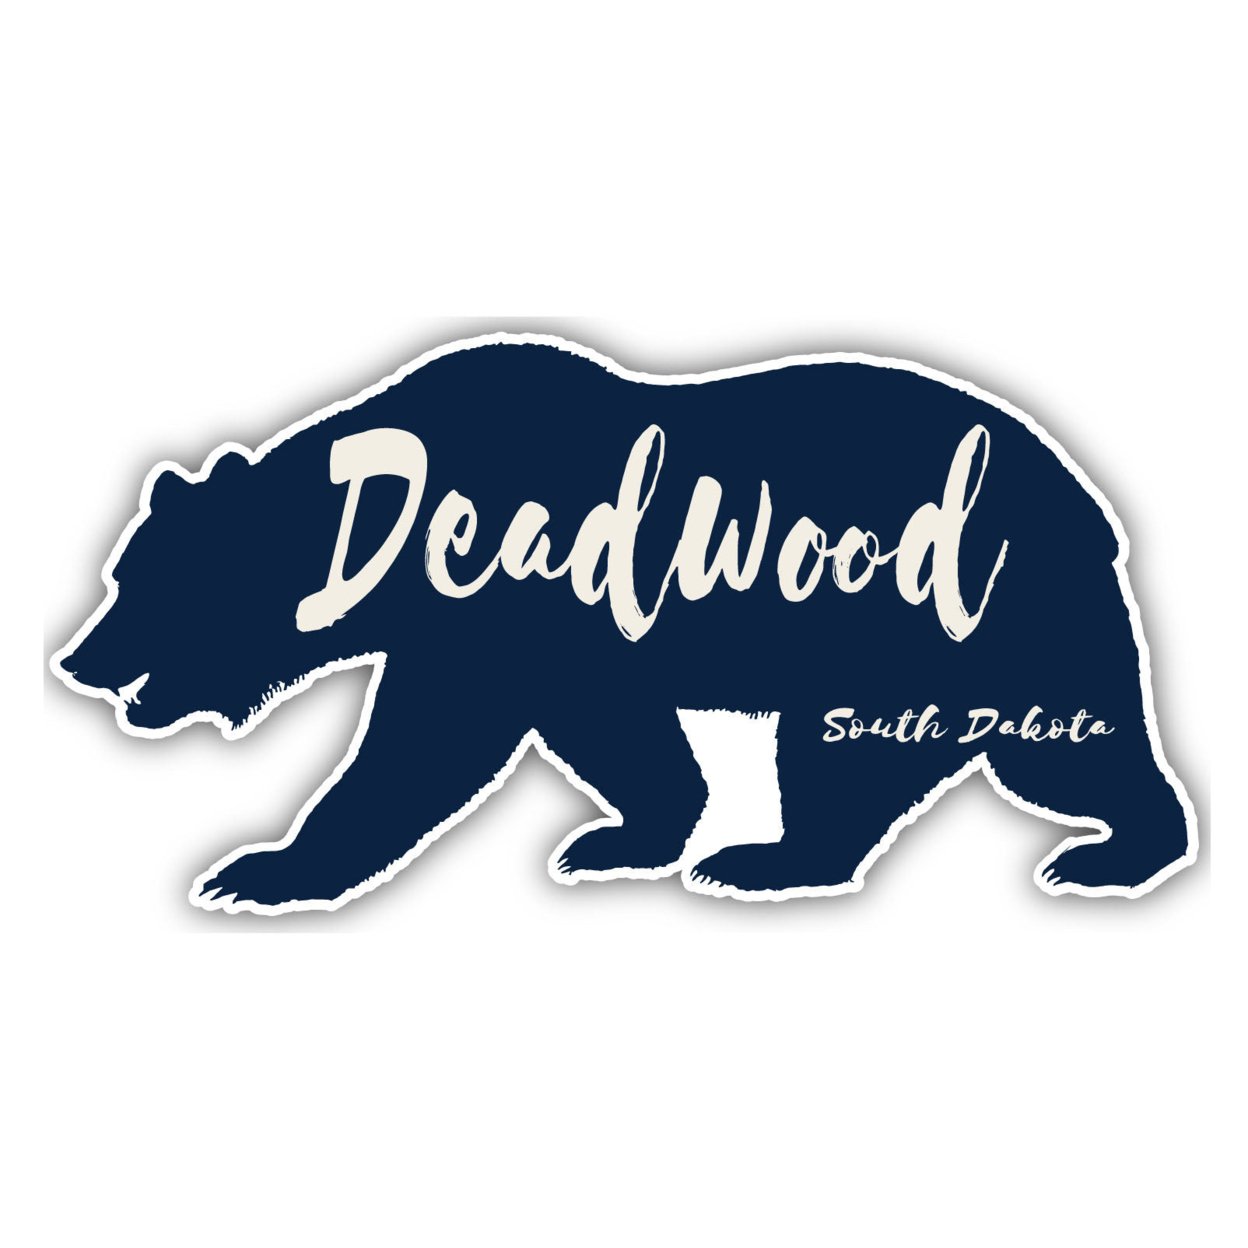 Deadwood South Dakota Souvenir Decorative Stickers (Choose Theme And Size) - 4-Pack, 12-Inch, Bear